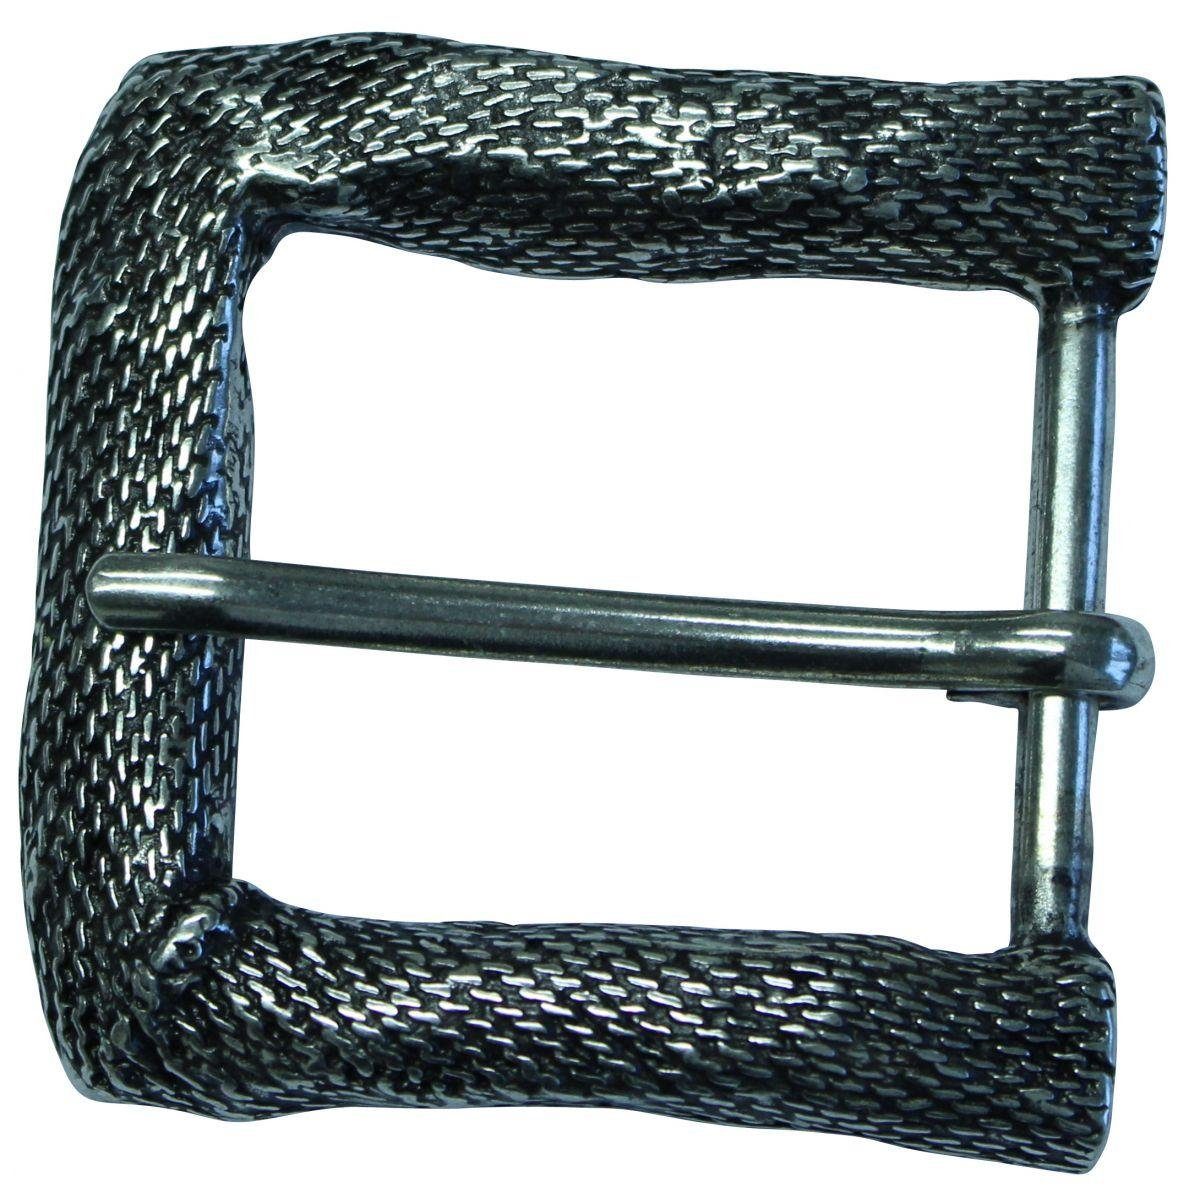 BELTINGER Gürtelschnalle Clasic 4,0 cm - Gürtelschließe 40mm - Dorn-Schließe - Gürtel bis 4cm